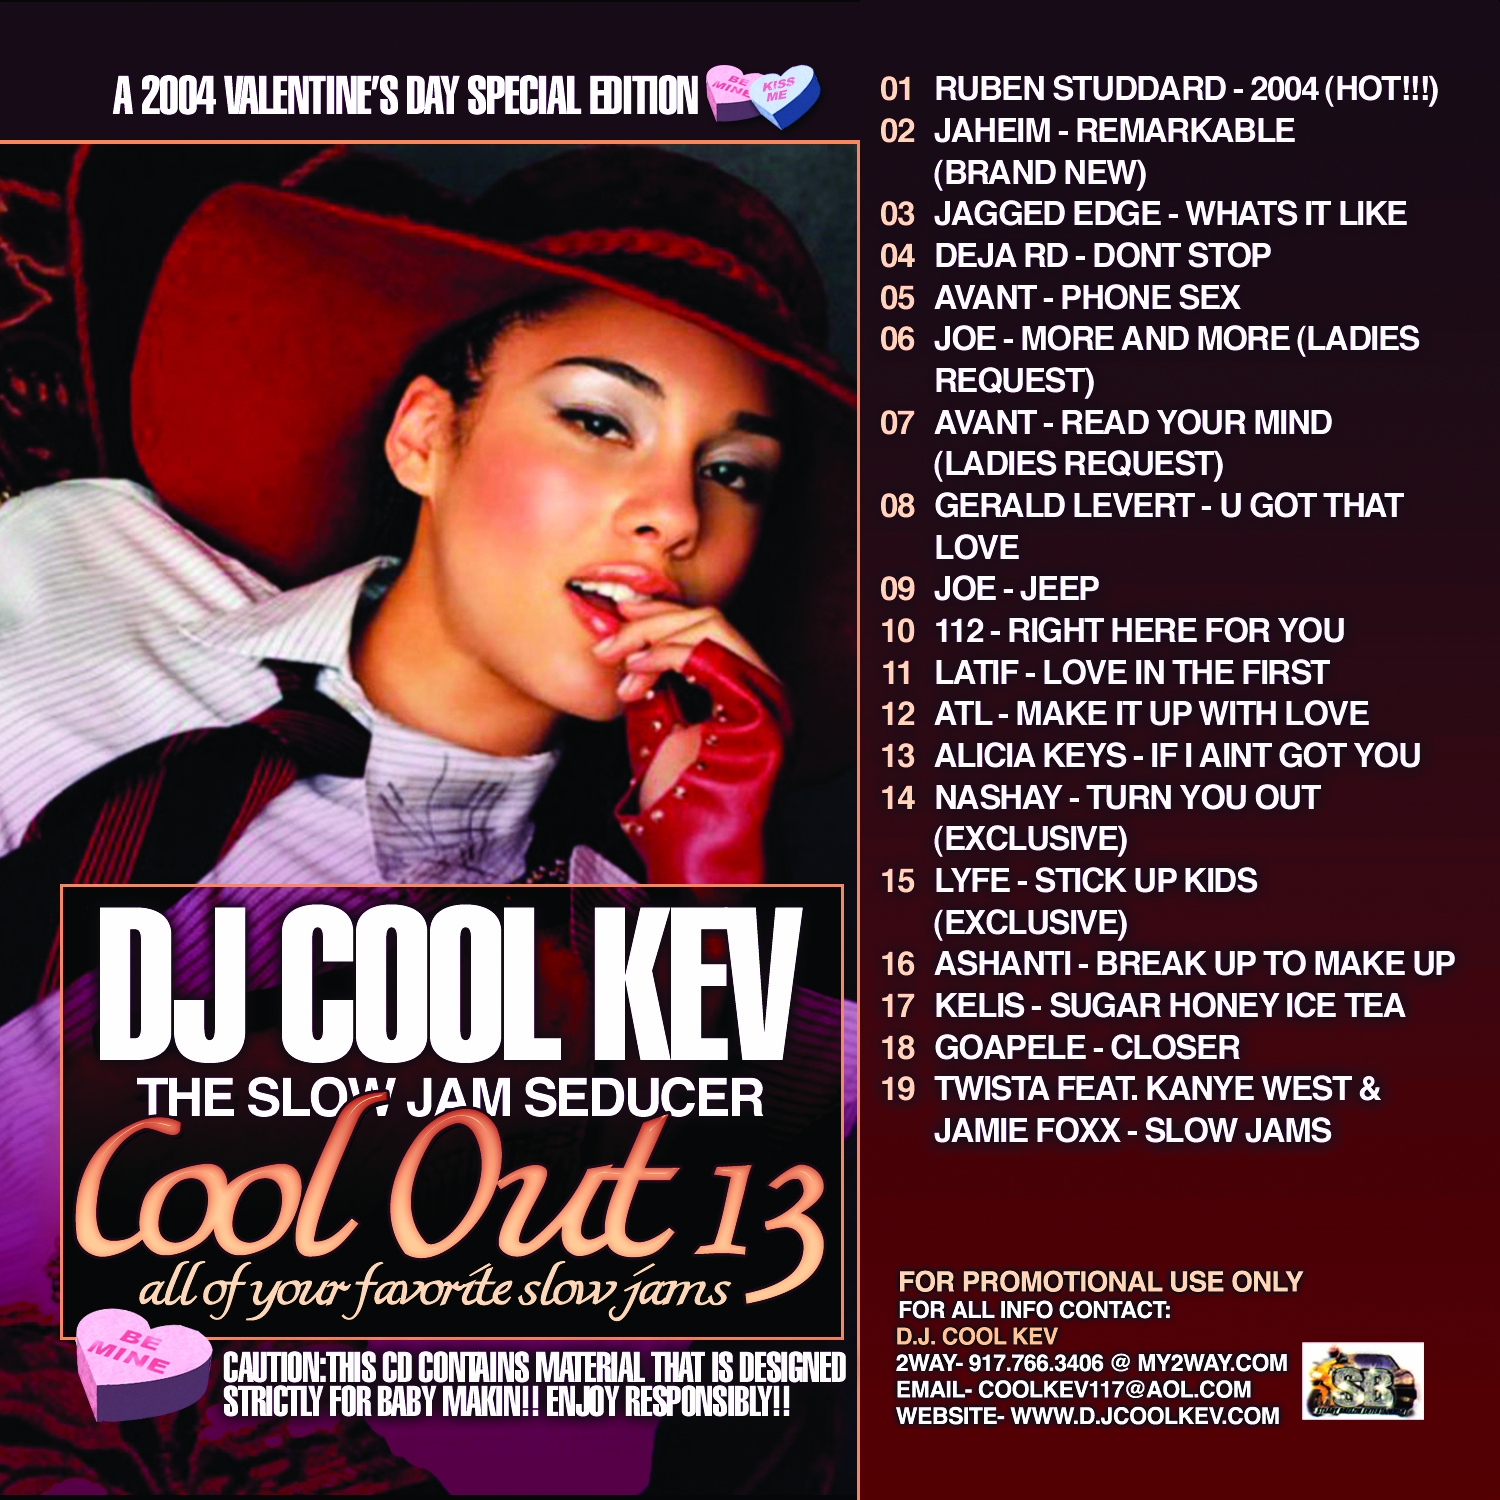 DJ Cool Kev – Coolout 13, R&B, Slow Jams, Throwback R&B, Mixtape Downloads, Downloads